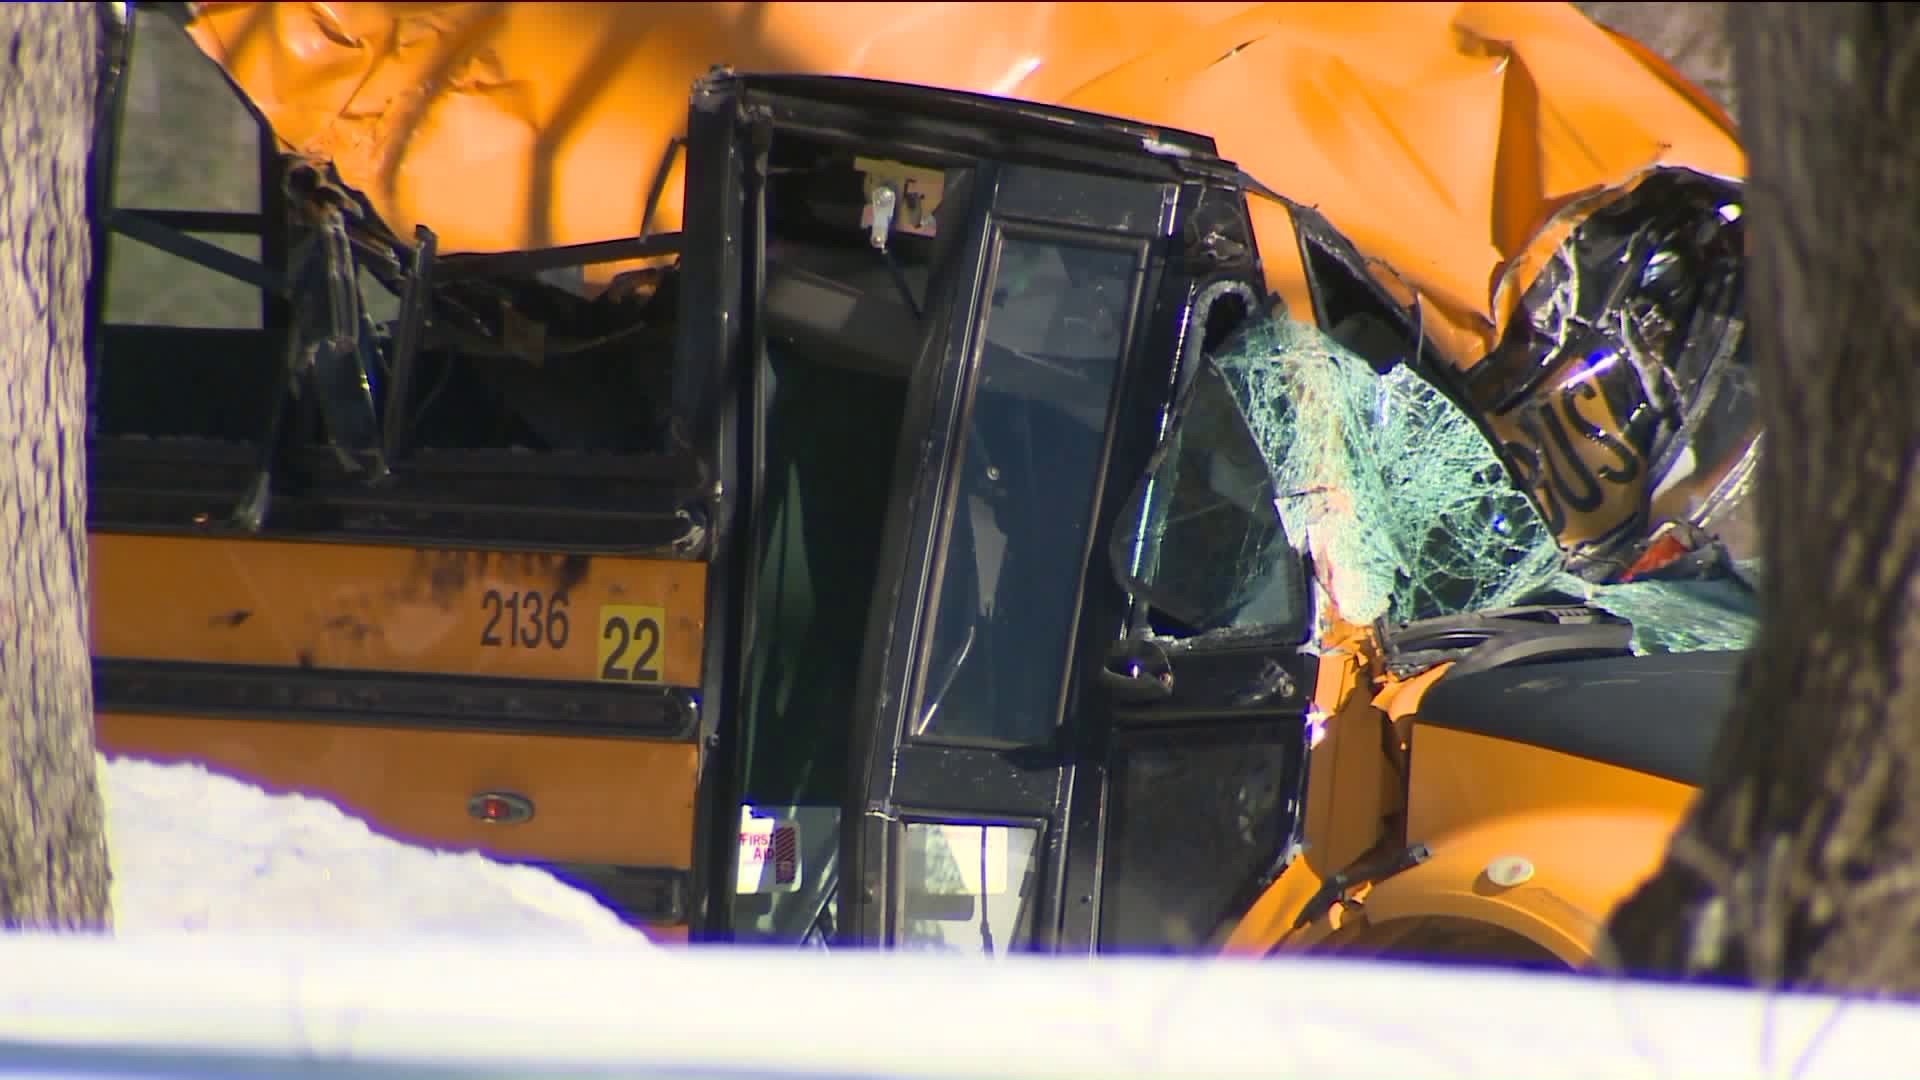 Tree falls on Avon bus, killing driver